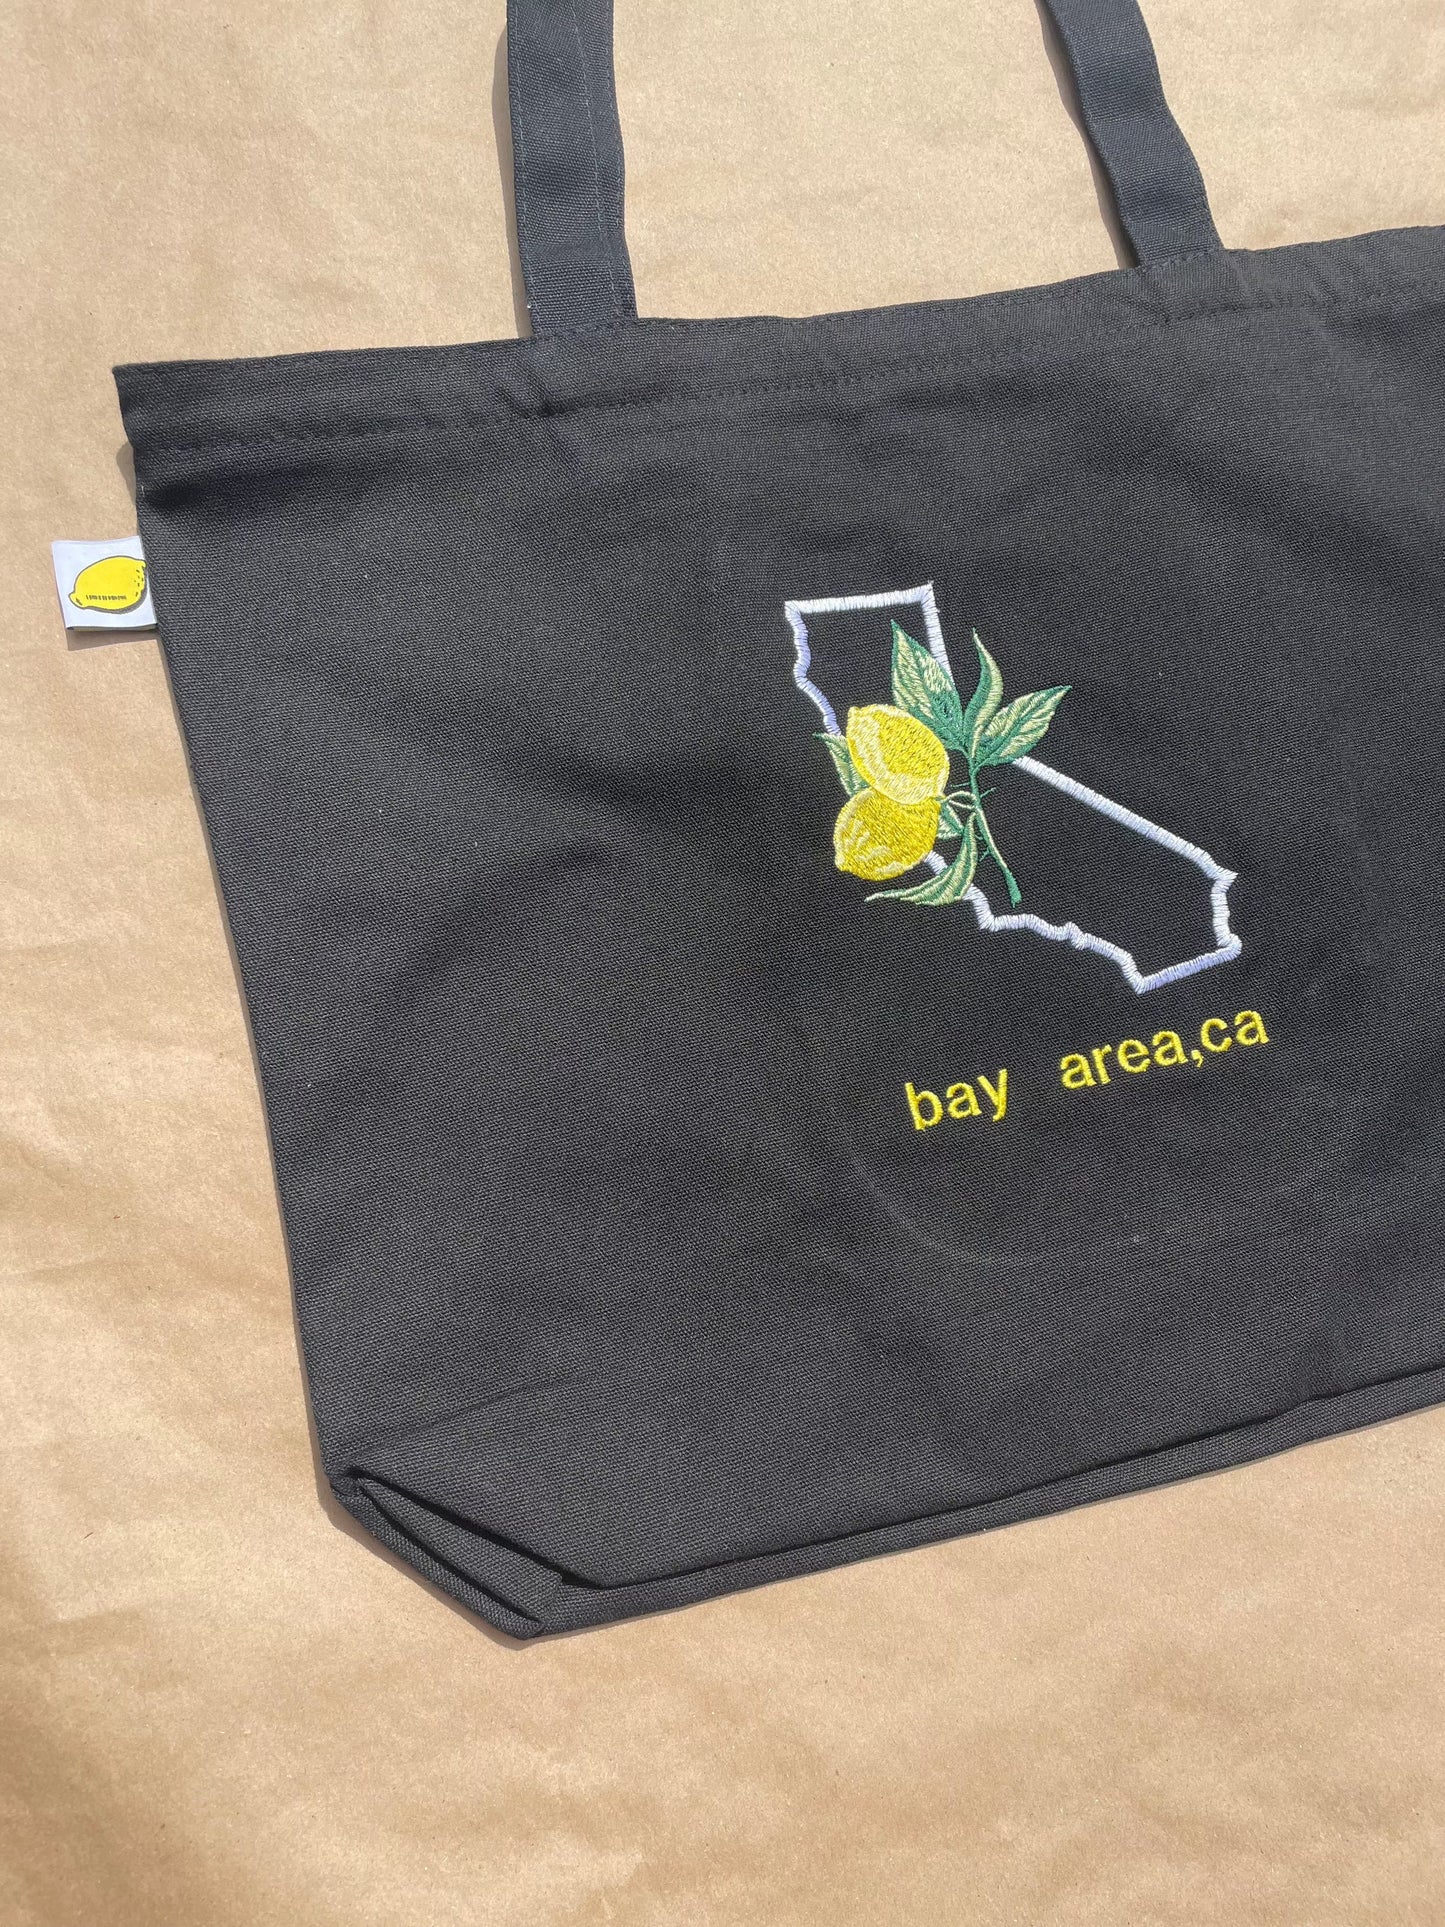 Bay Area, California Large Black Tote Bag